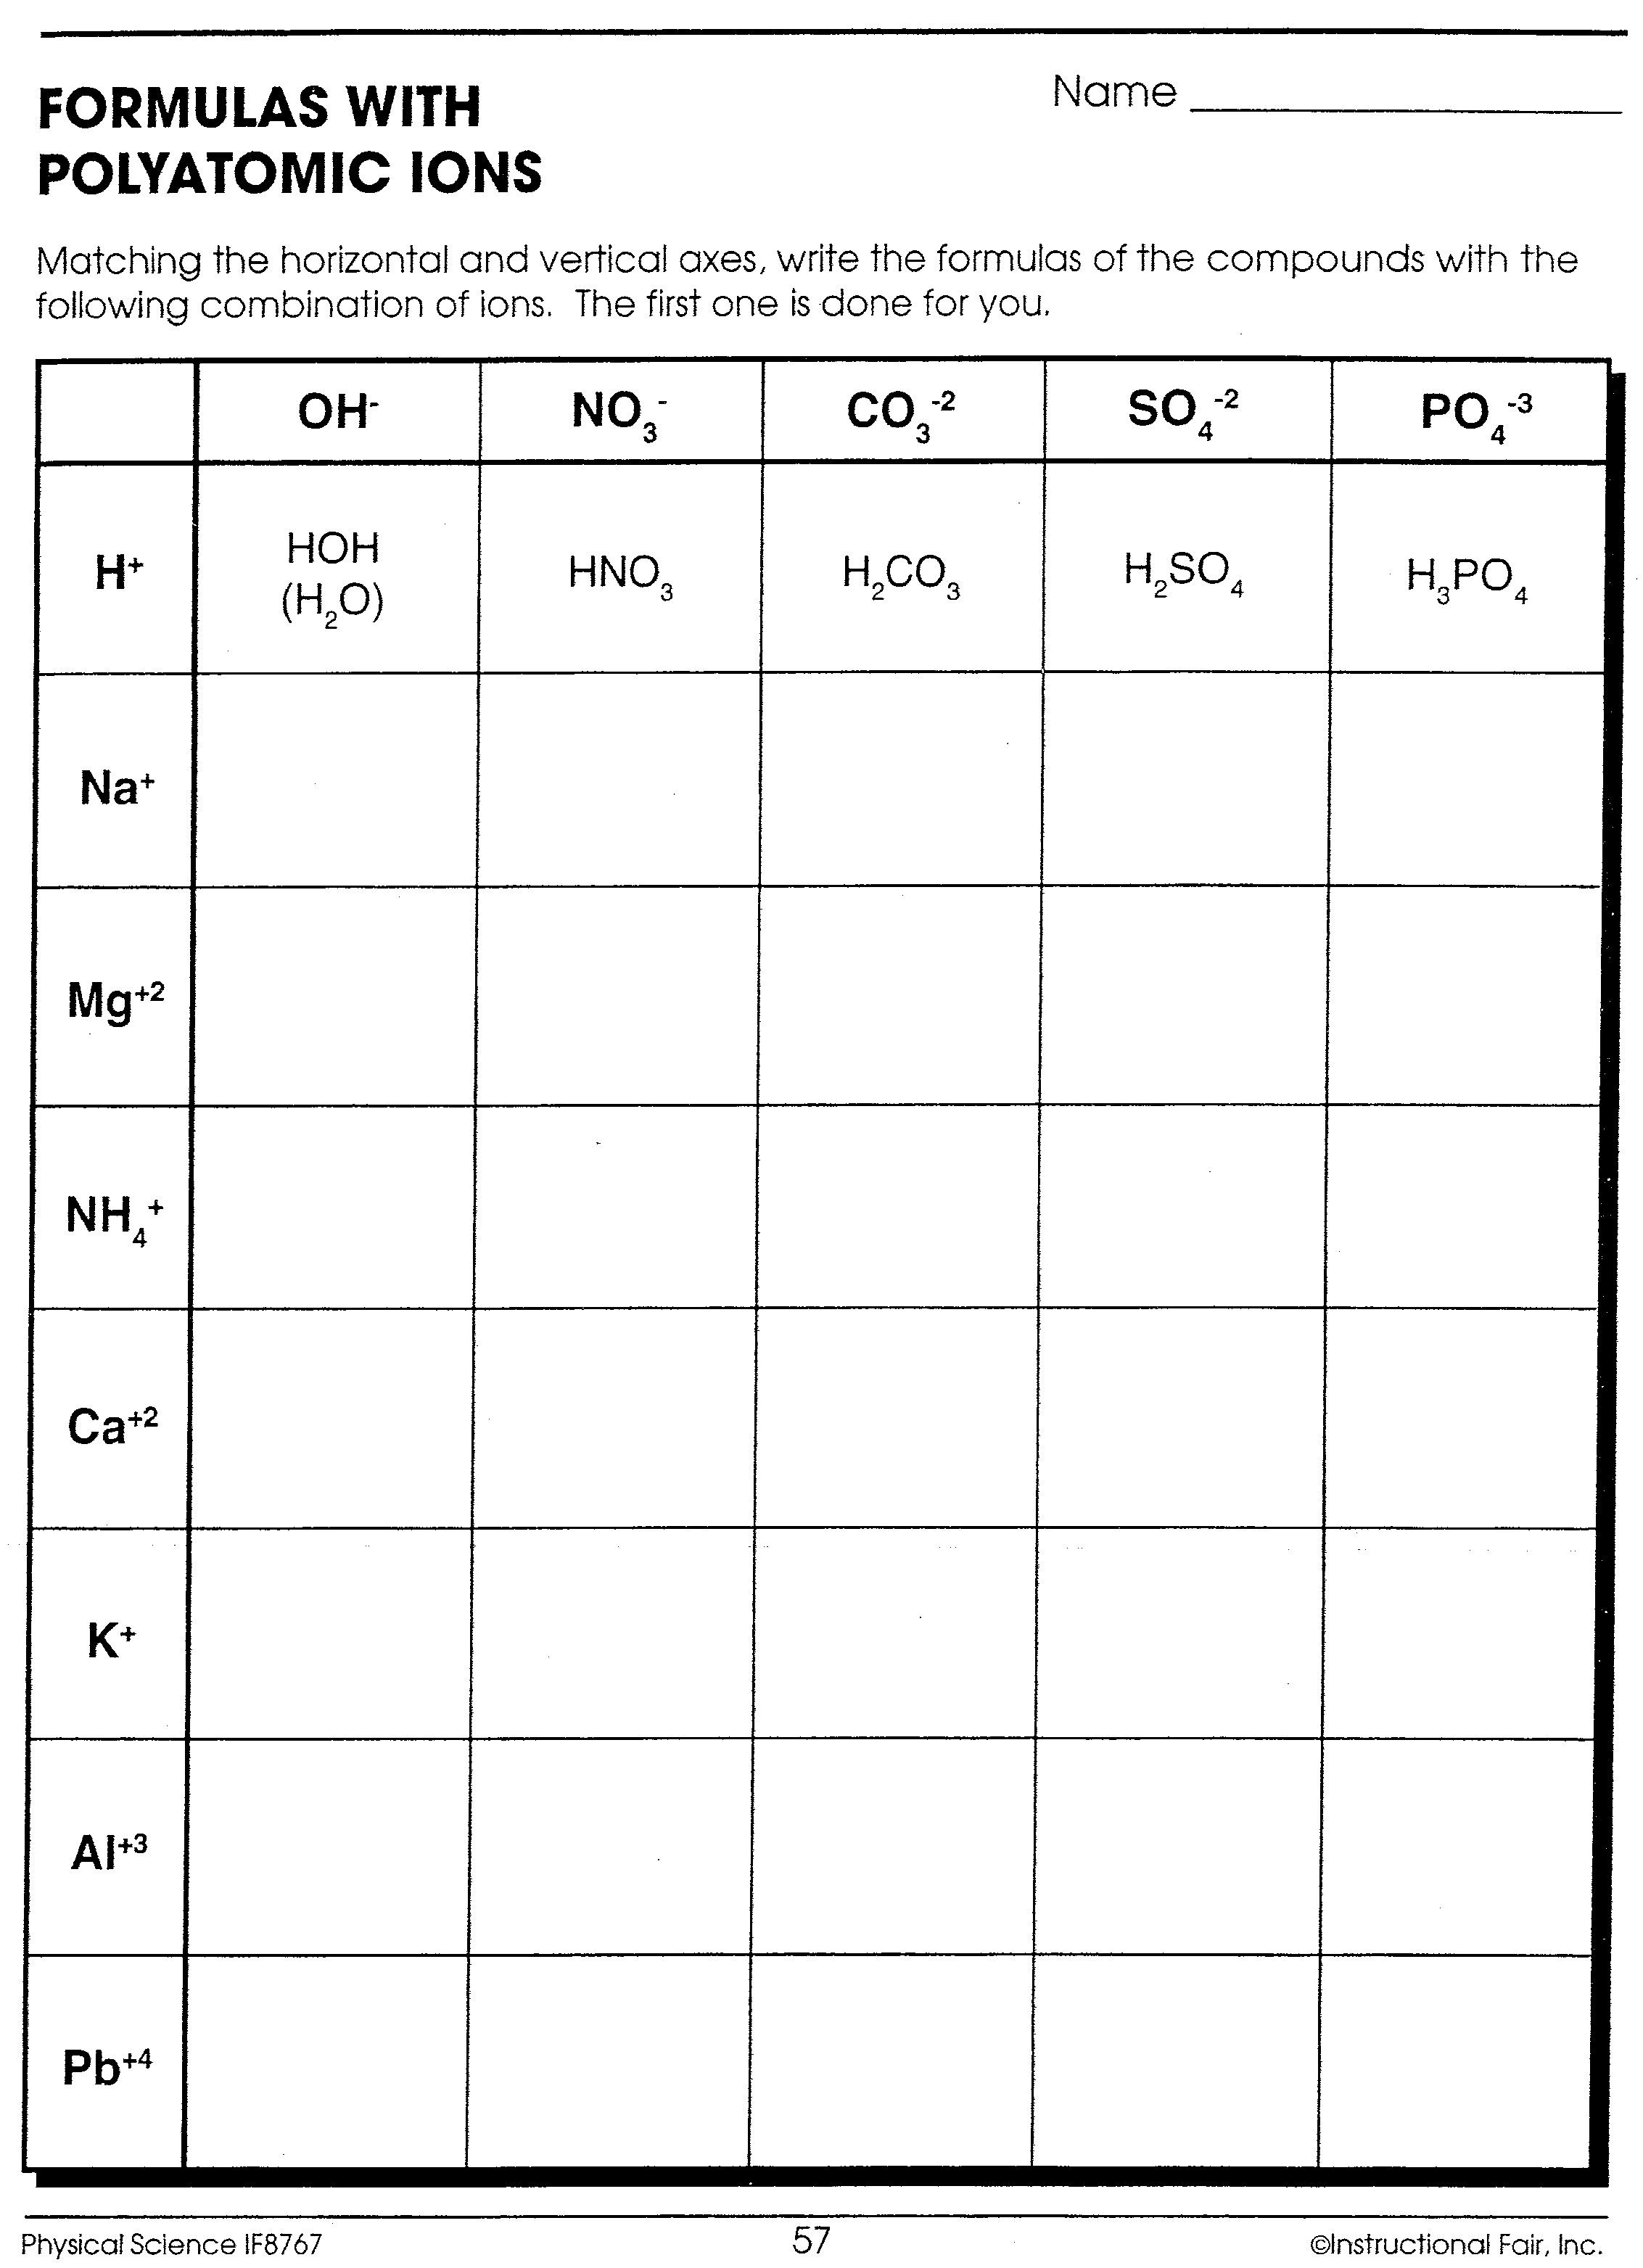 naming-acids-worksheet